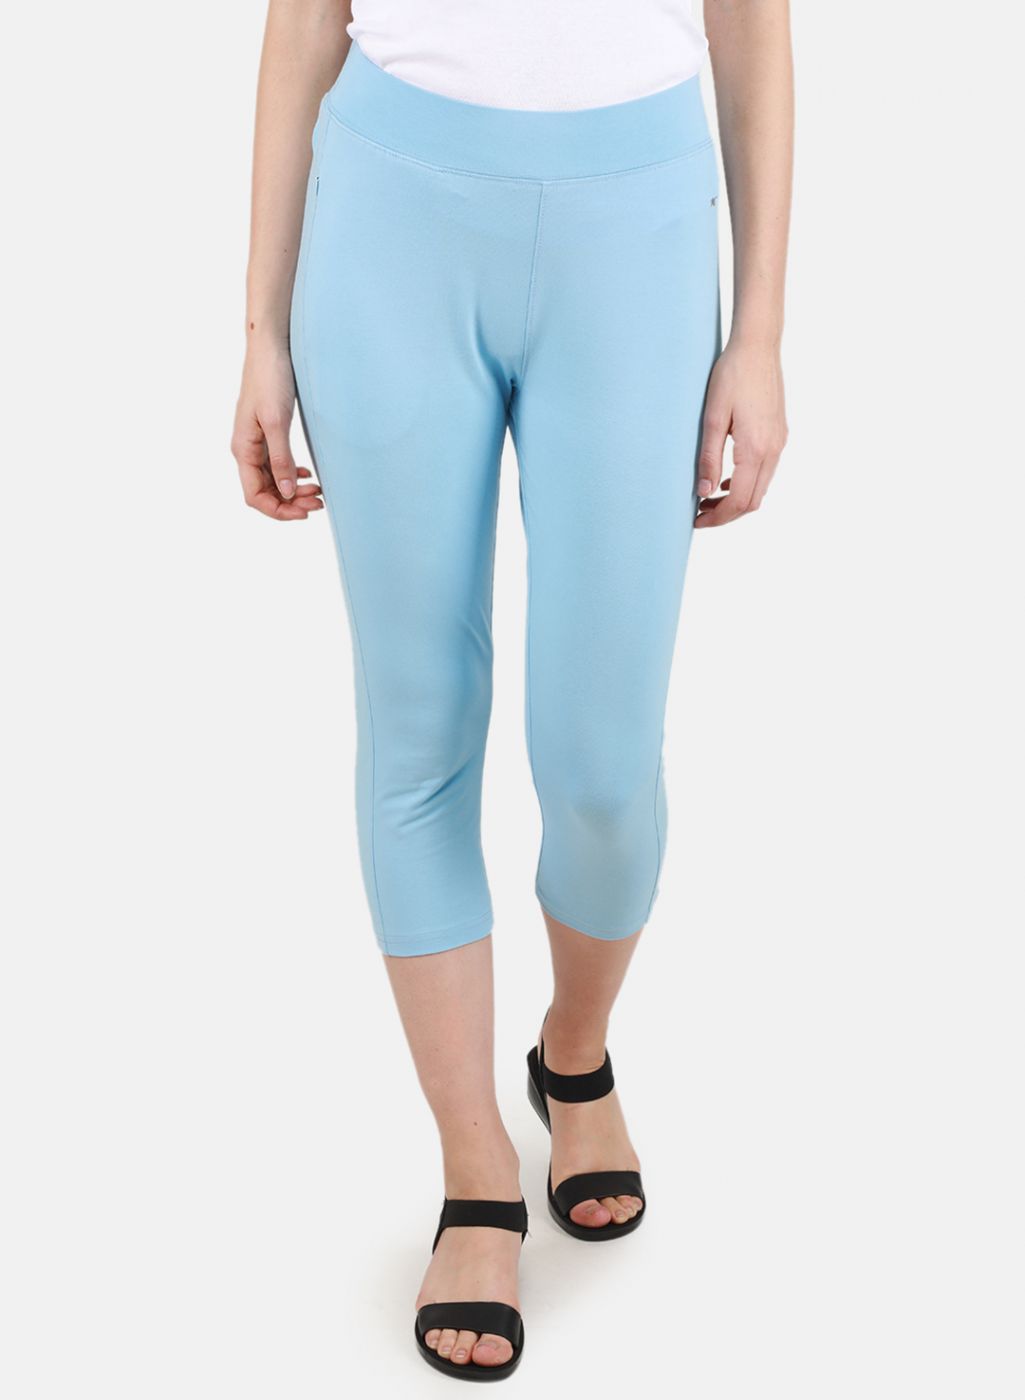 Capris for Women: Buy Capri Pants for Women Online at Best Price